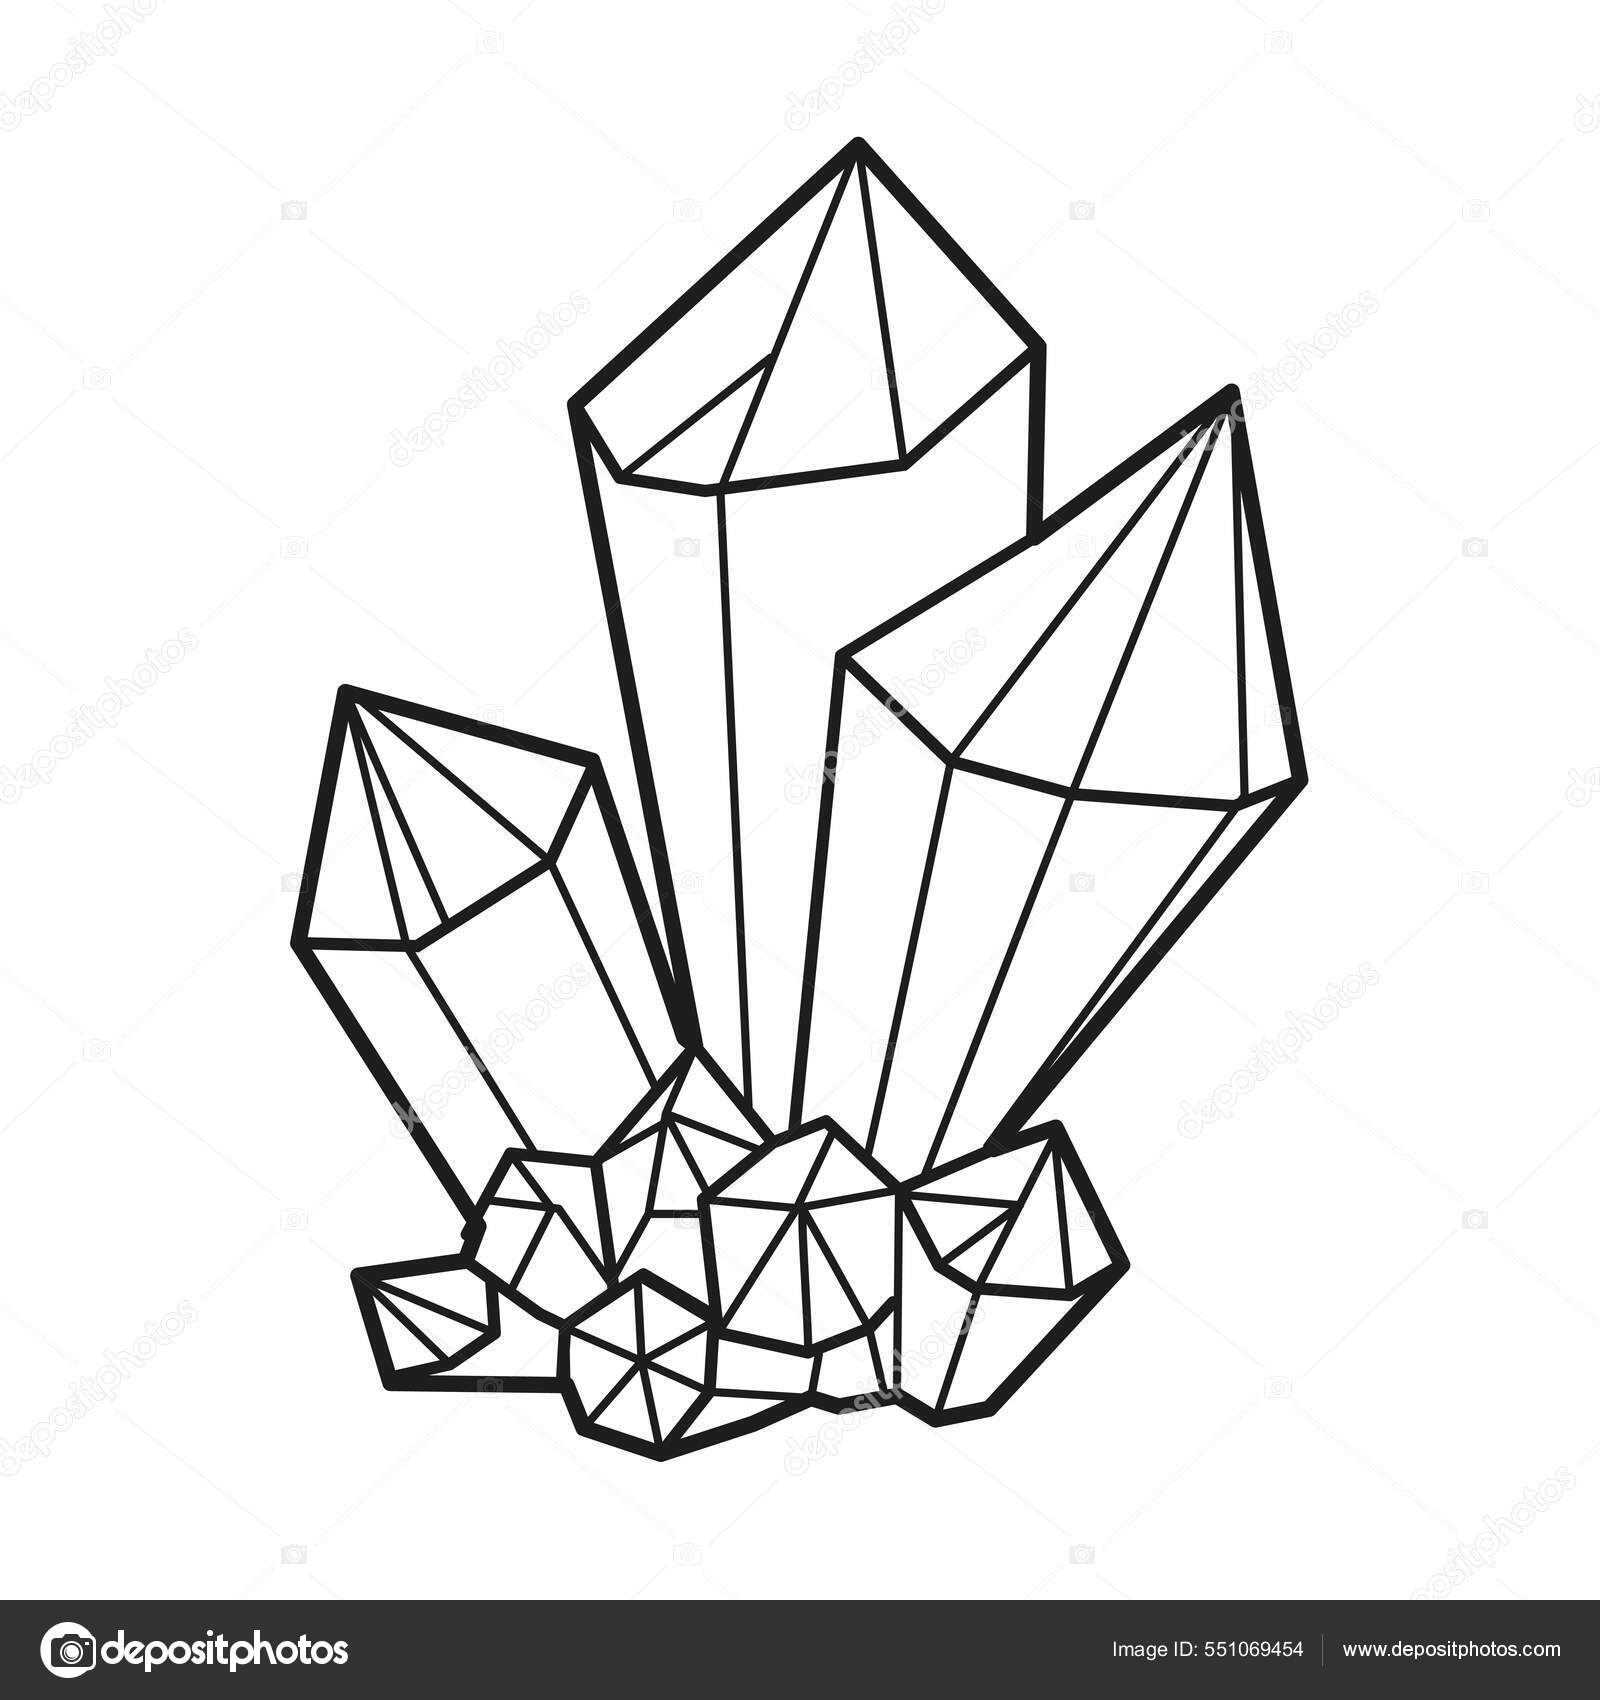 https://st.depositphotos.com/1002015/55106/v/1600/depositphotos_551069454-stock-illustration-linear-drawing-magic-big-small.jpg